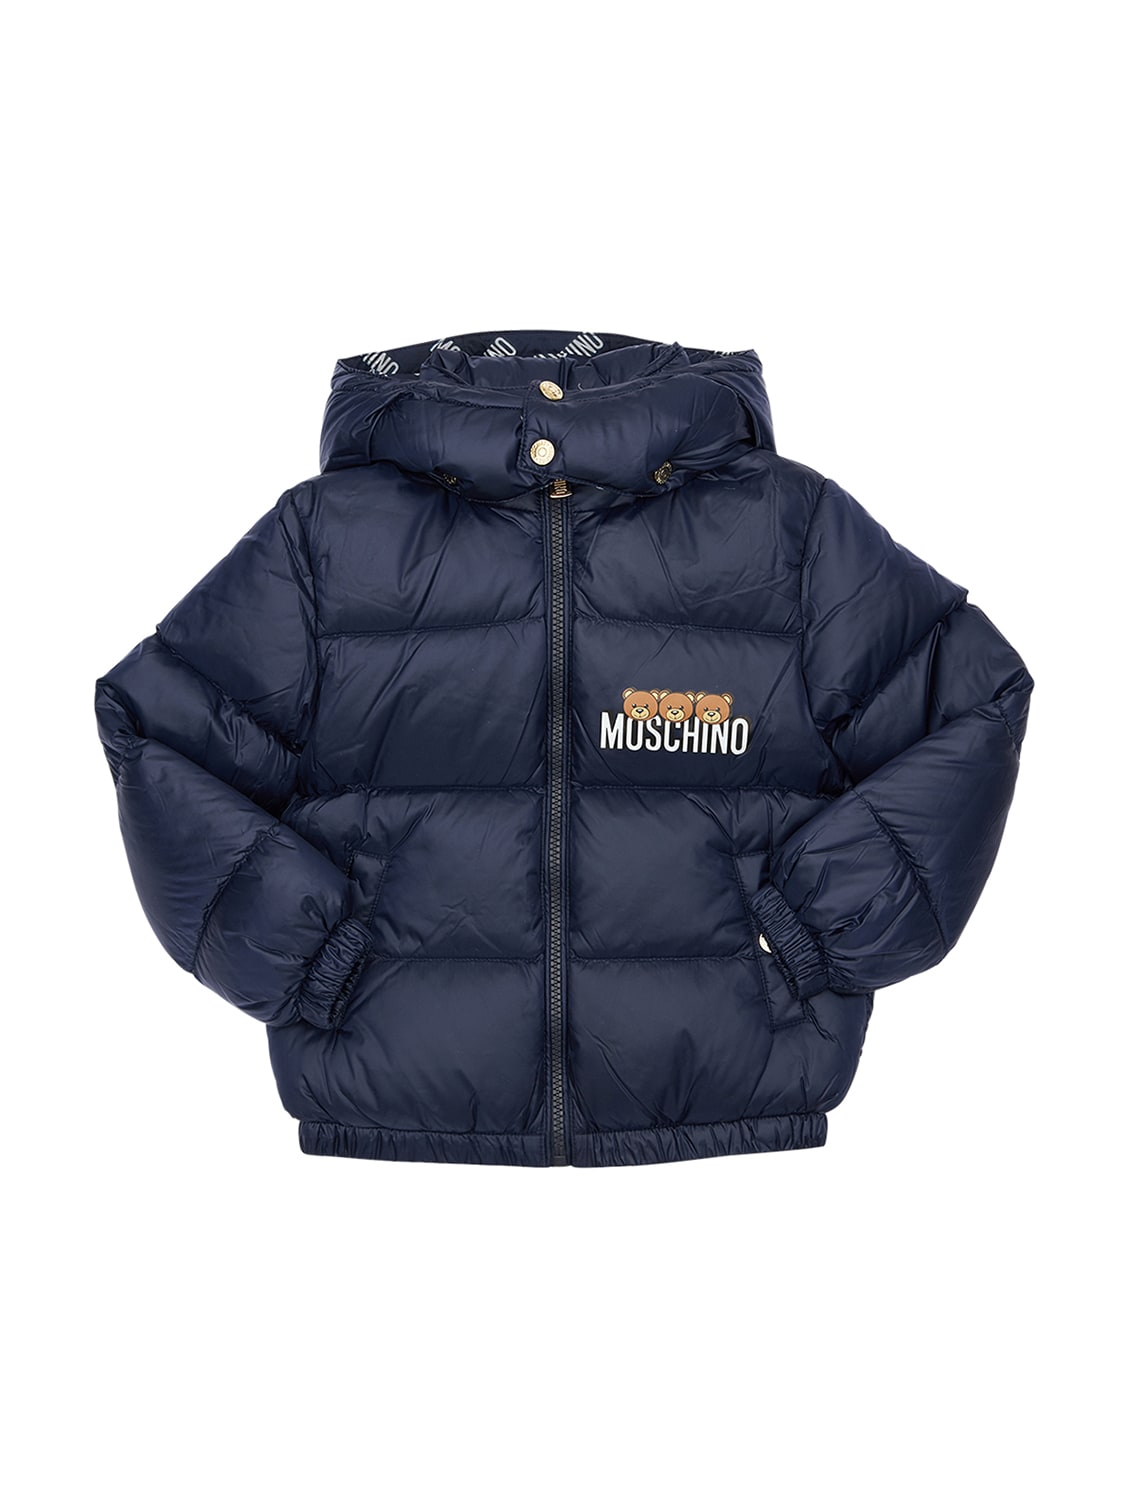 moschino logo jacket